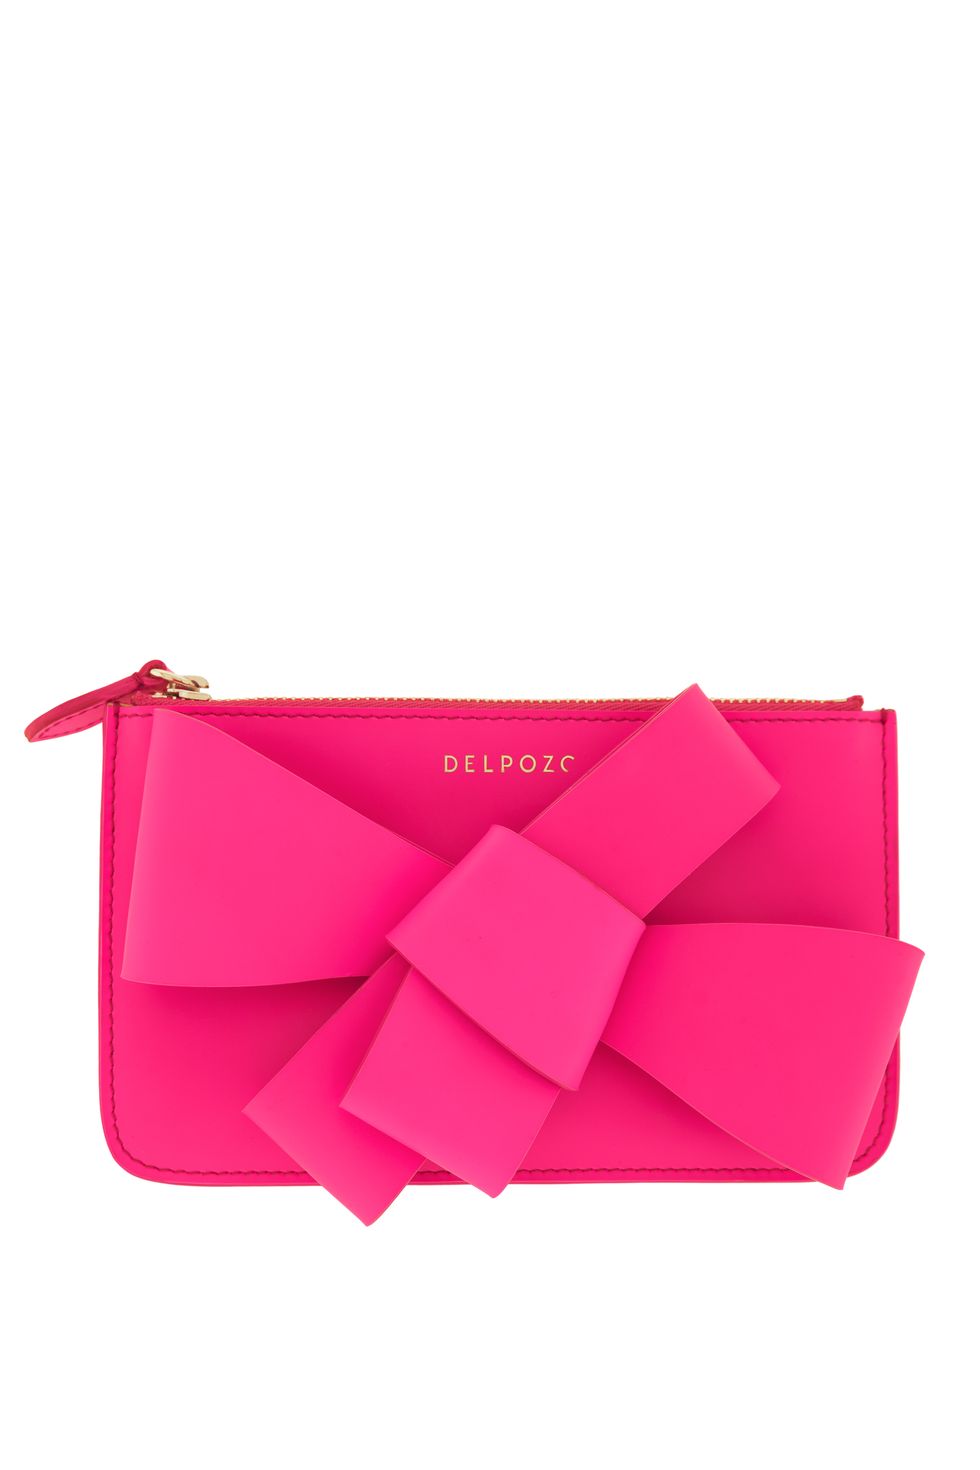 Bag, Pink, Handbag, Red, Magenta, Fashion accessory, Shoulder bag, Leather, Material property, Coin purse, 